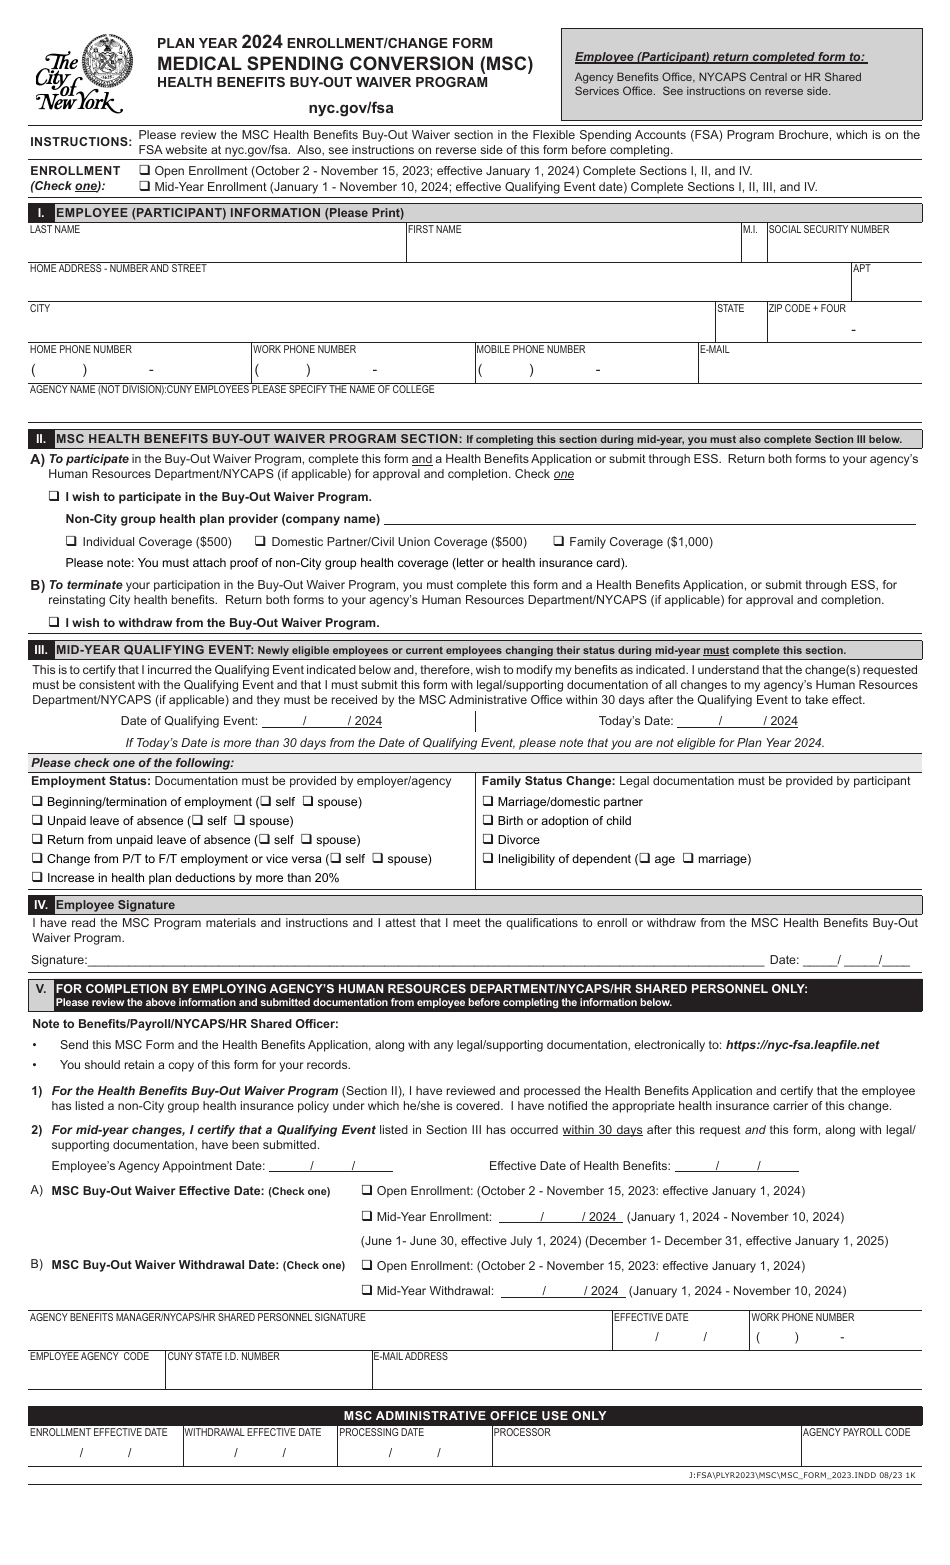 Enrollment / Change Form - Medical Spending Conversion (Msc) Health Benefits Buy-Out Waiver Program - New York City, Page 1